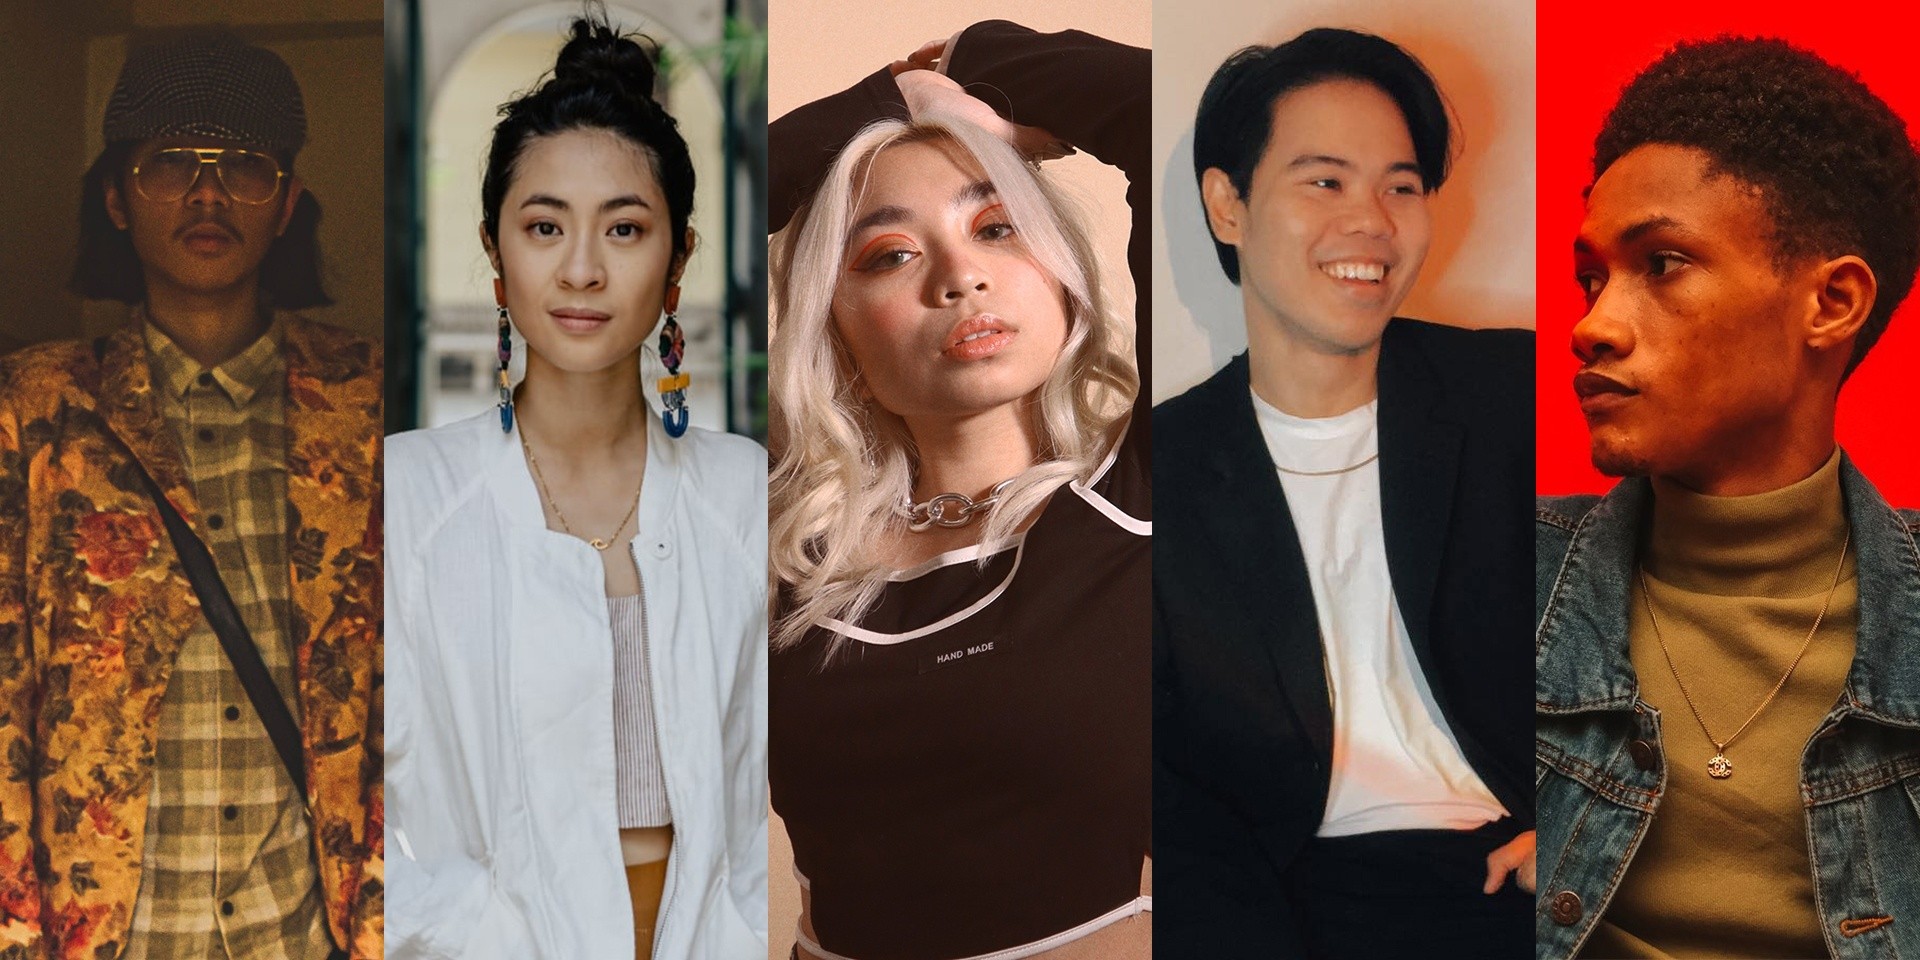 5 up-and-coming Filipino artists who deserve a listen – Dilaw, Muri, Aloura, Amiel Aban, Sam Akins